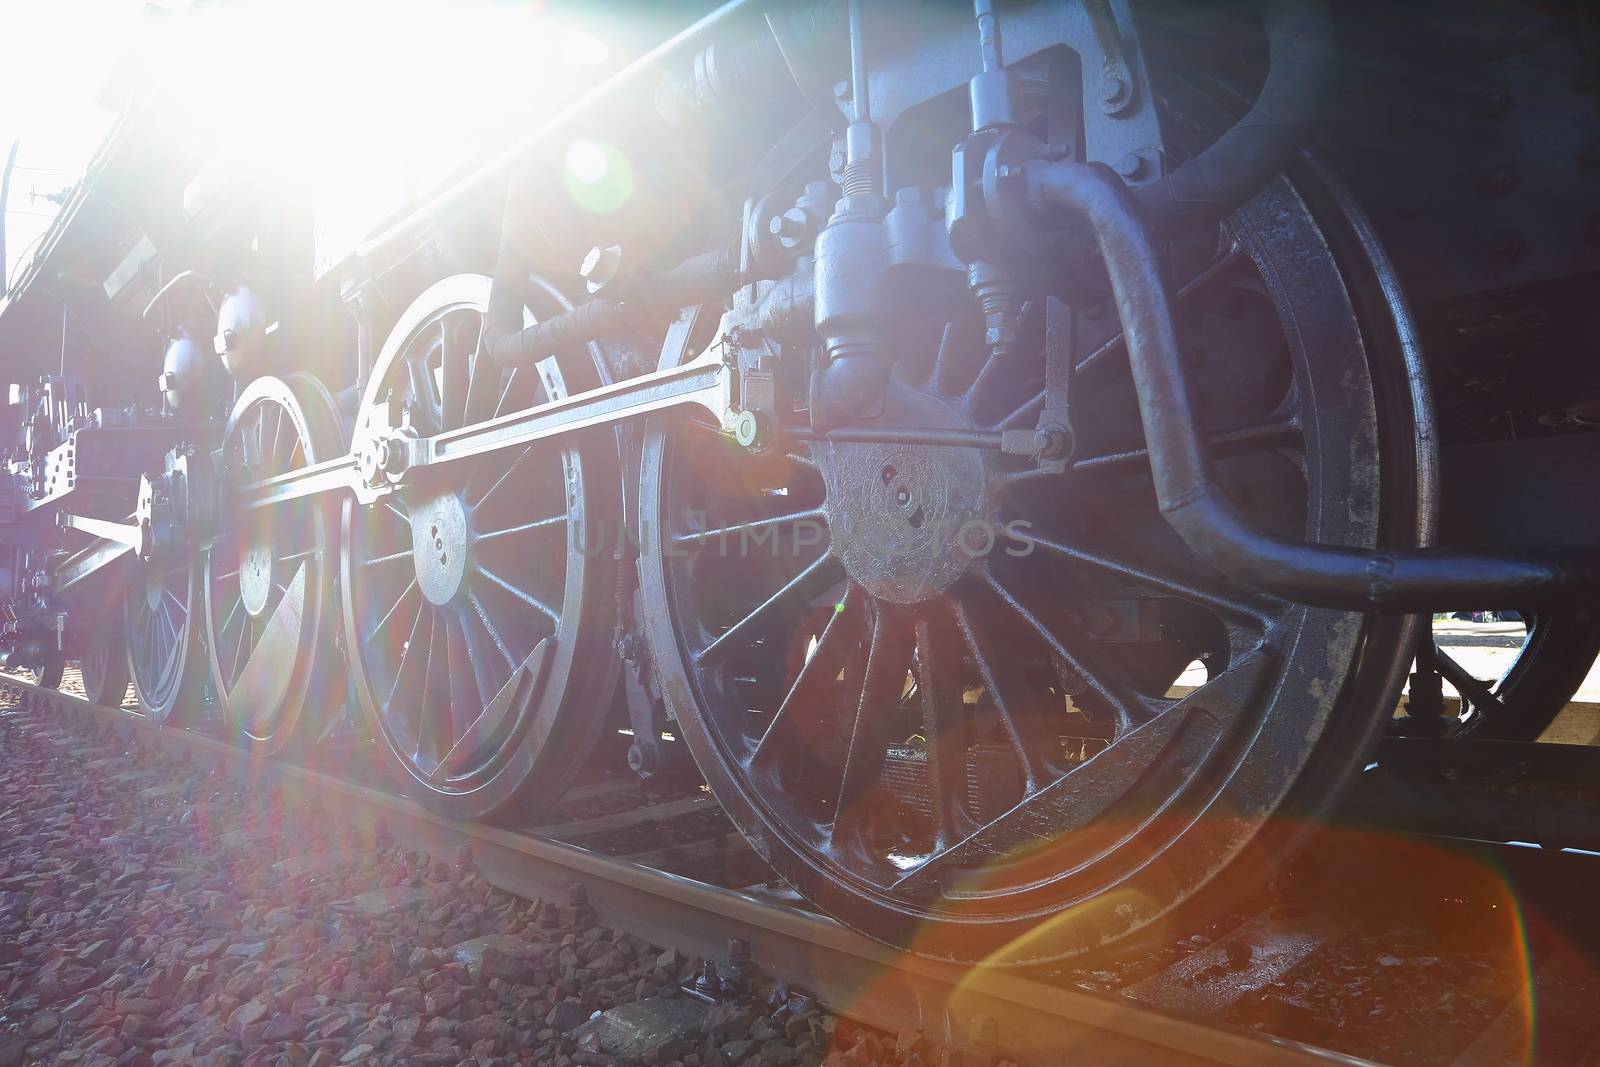 Steam locomotive with flaring sunlight